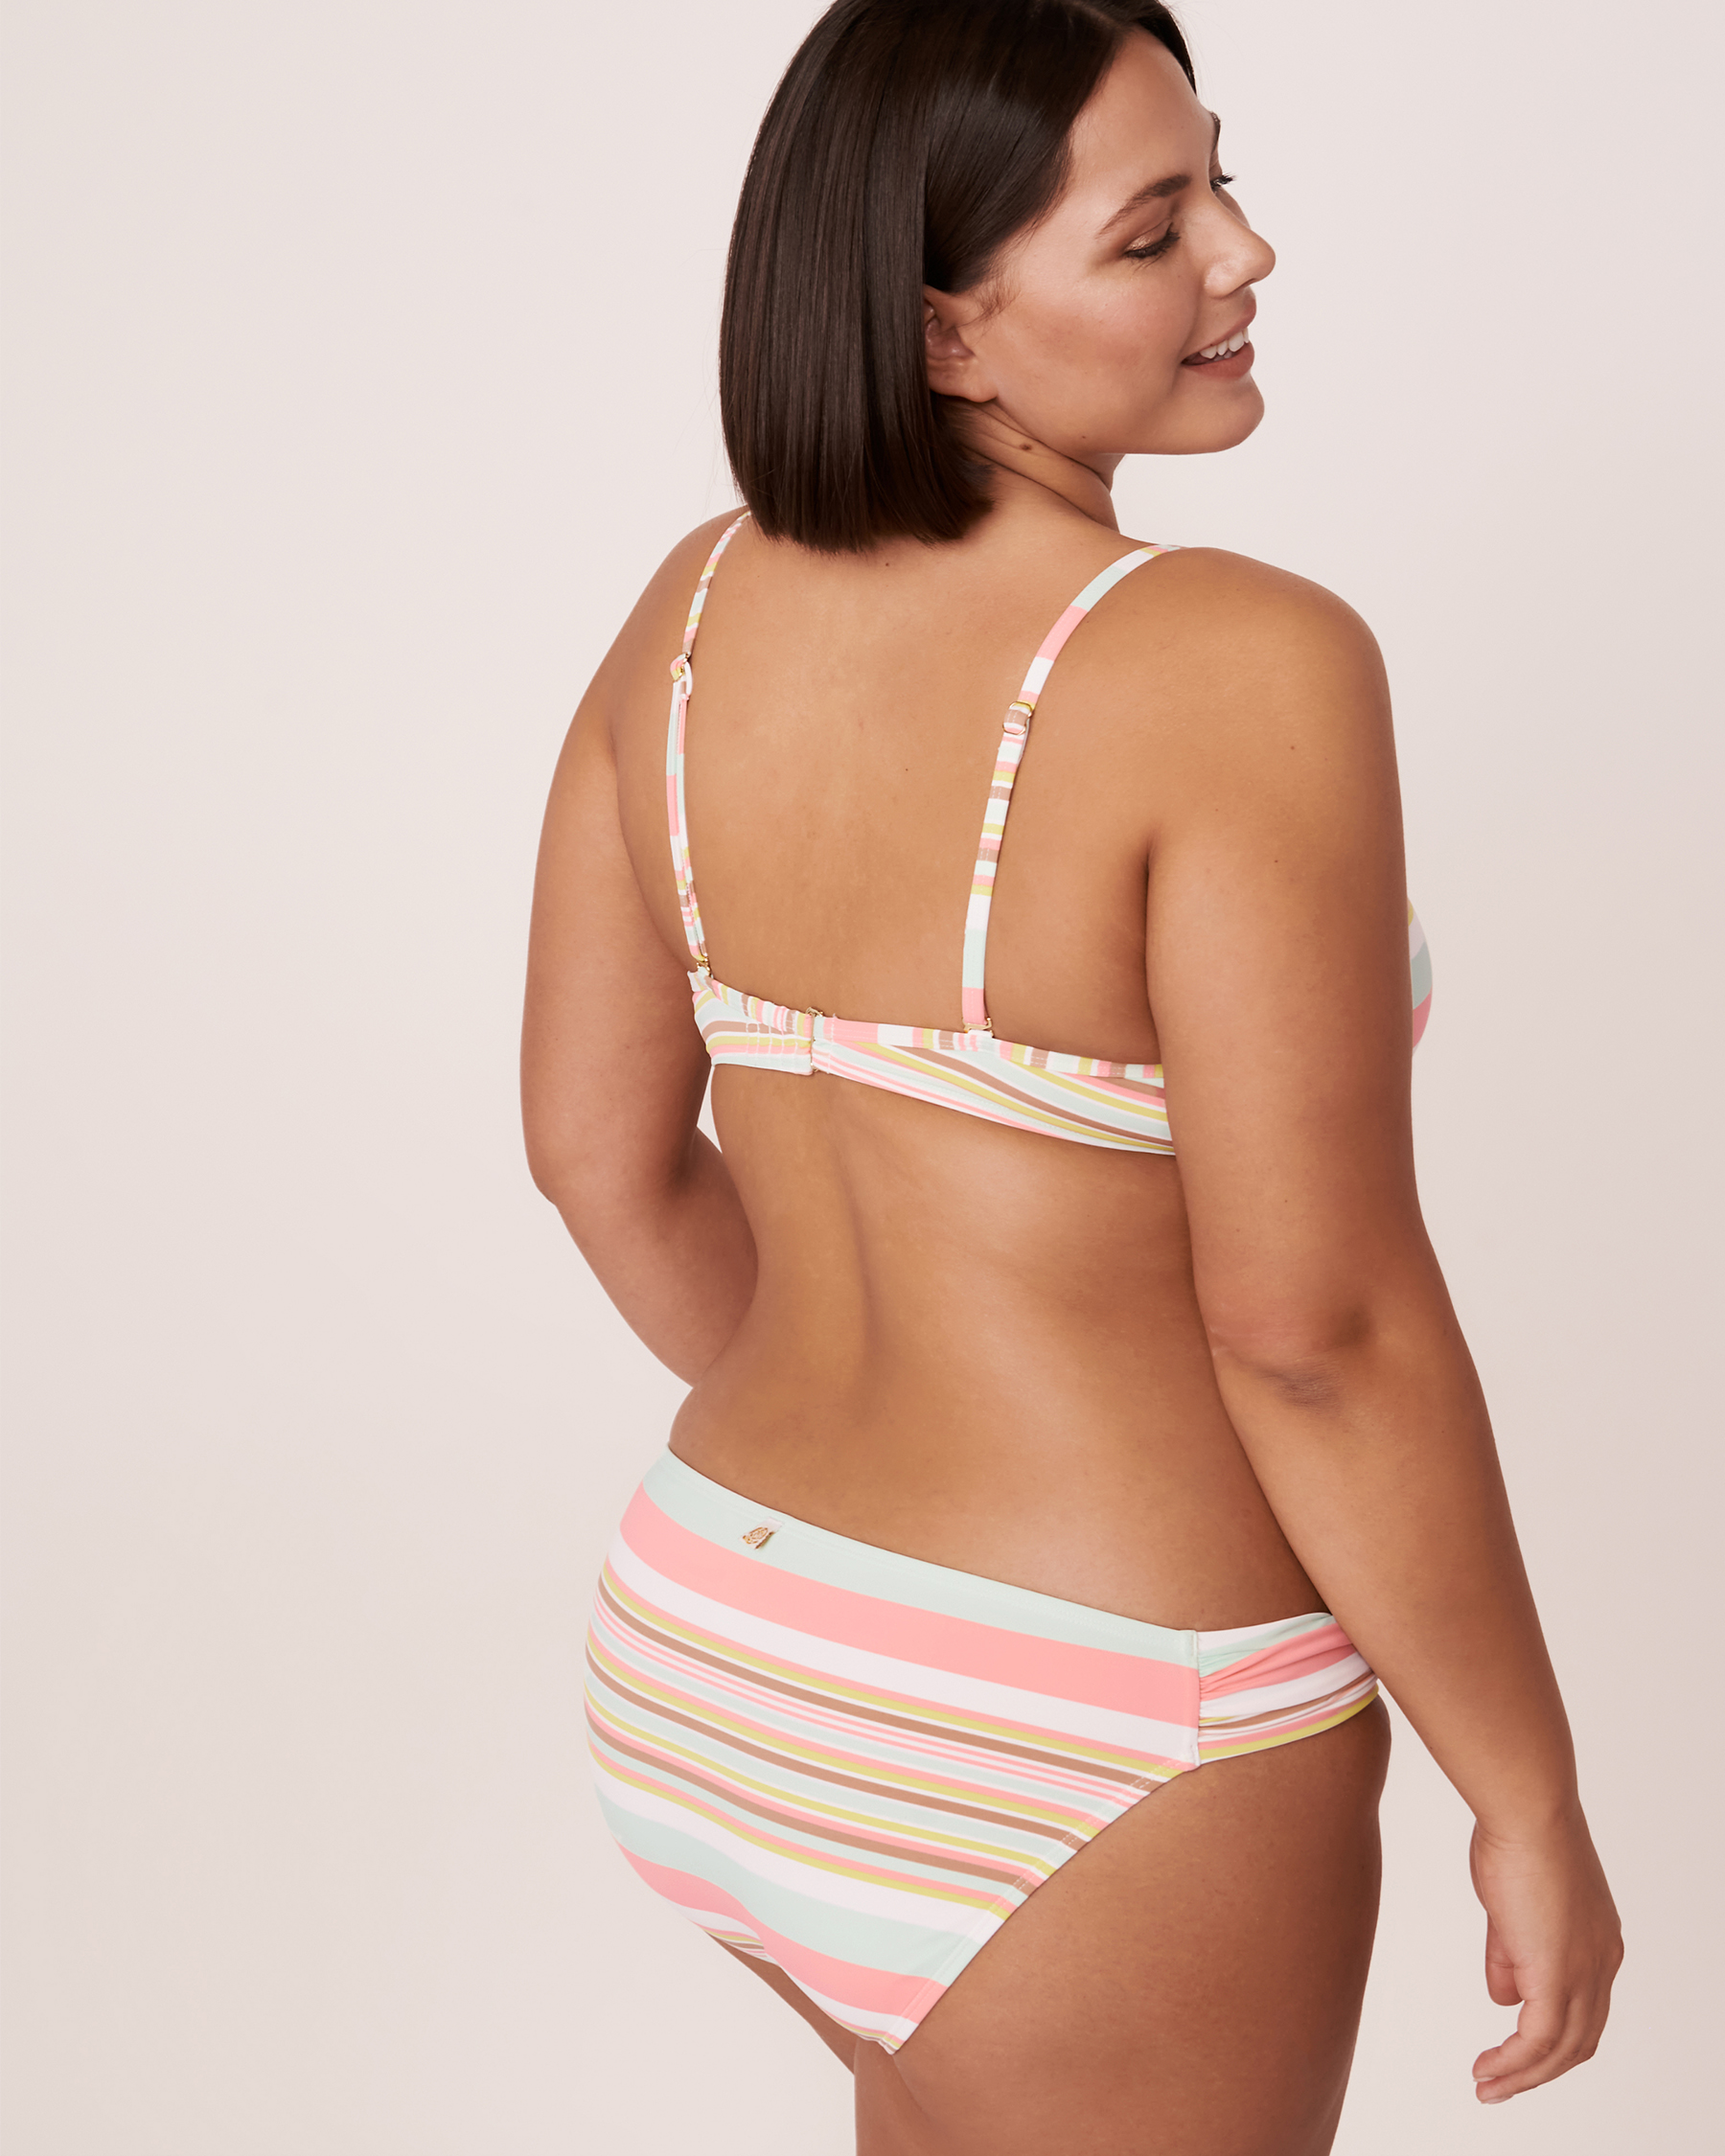 LA VIE EN ROSE AQUA REFRESHFUL Push-up Bikini Top Happy stripes 70100185 - View3